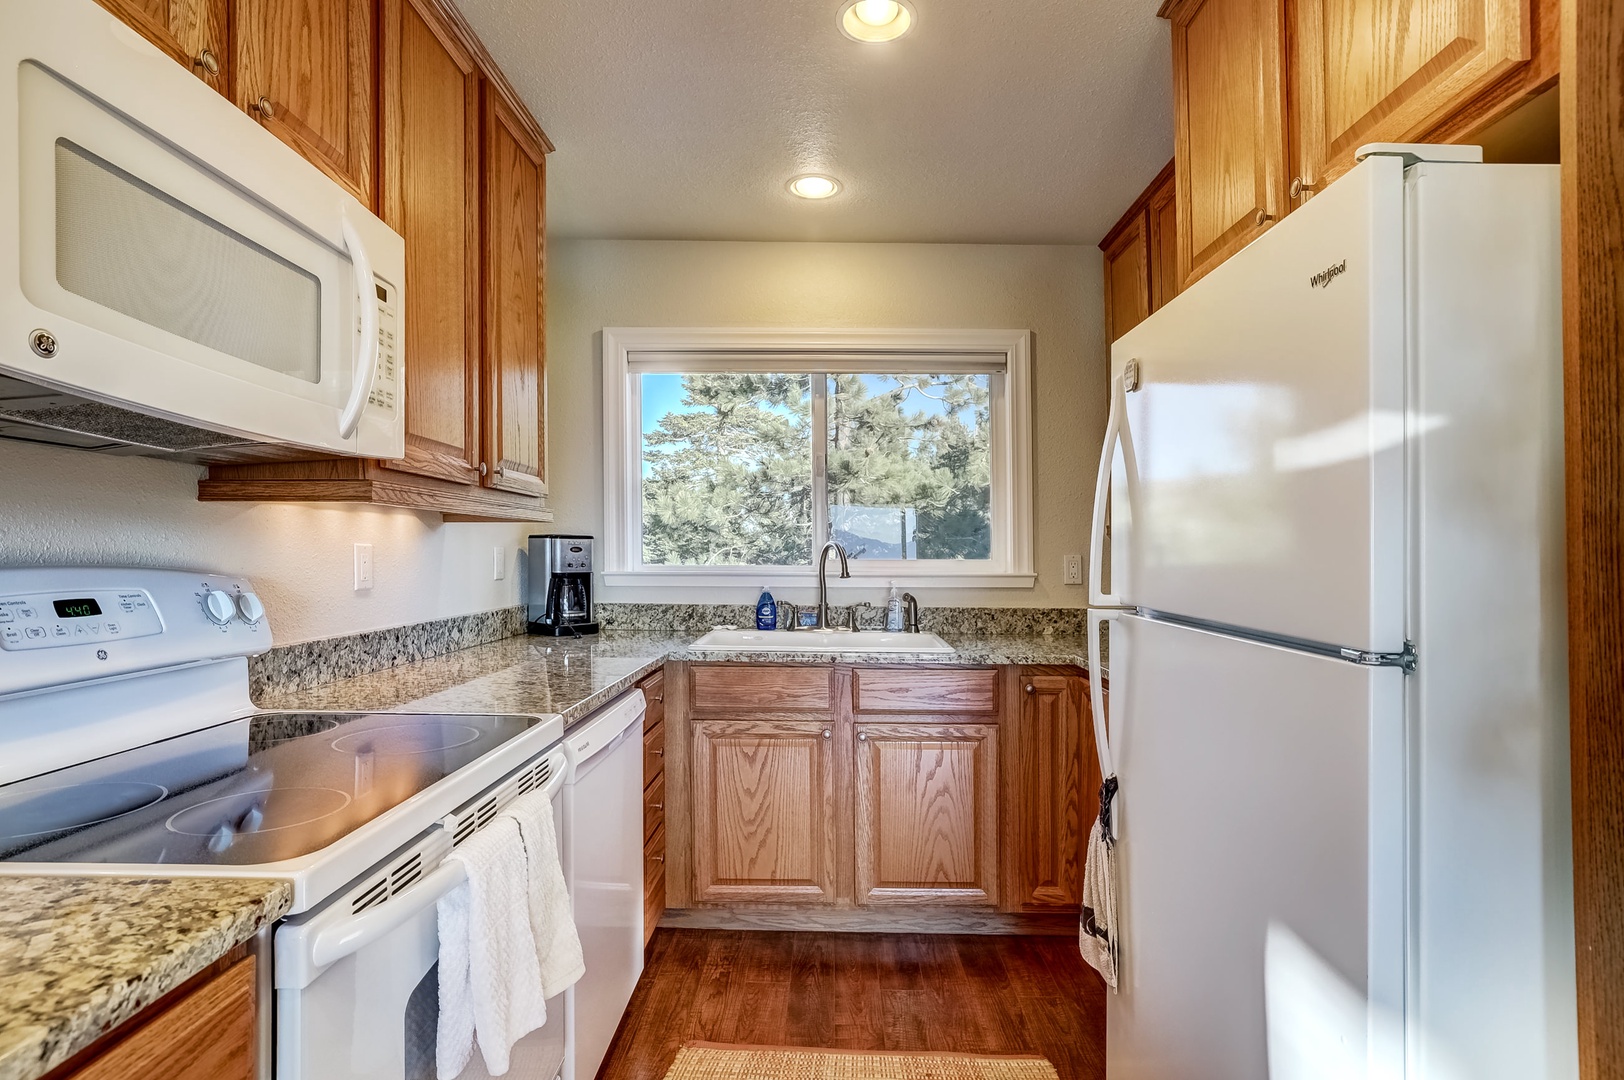 Full kitchen with wine fridge, dishwasher, and standard drip coffee maker